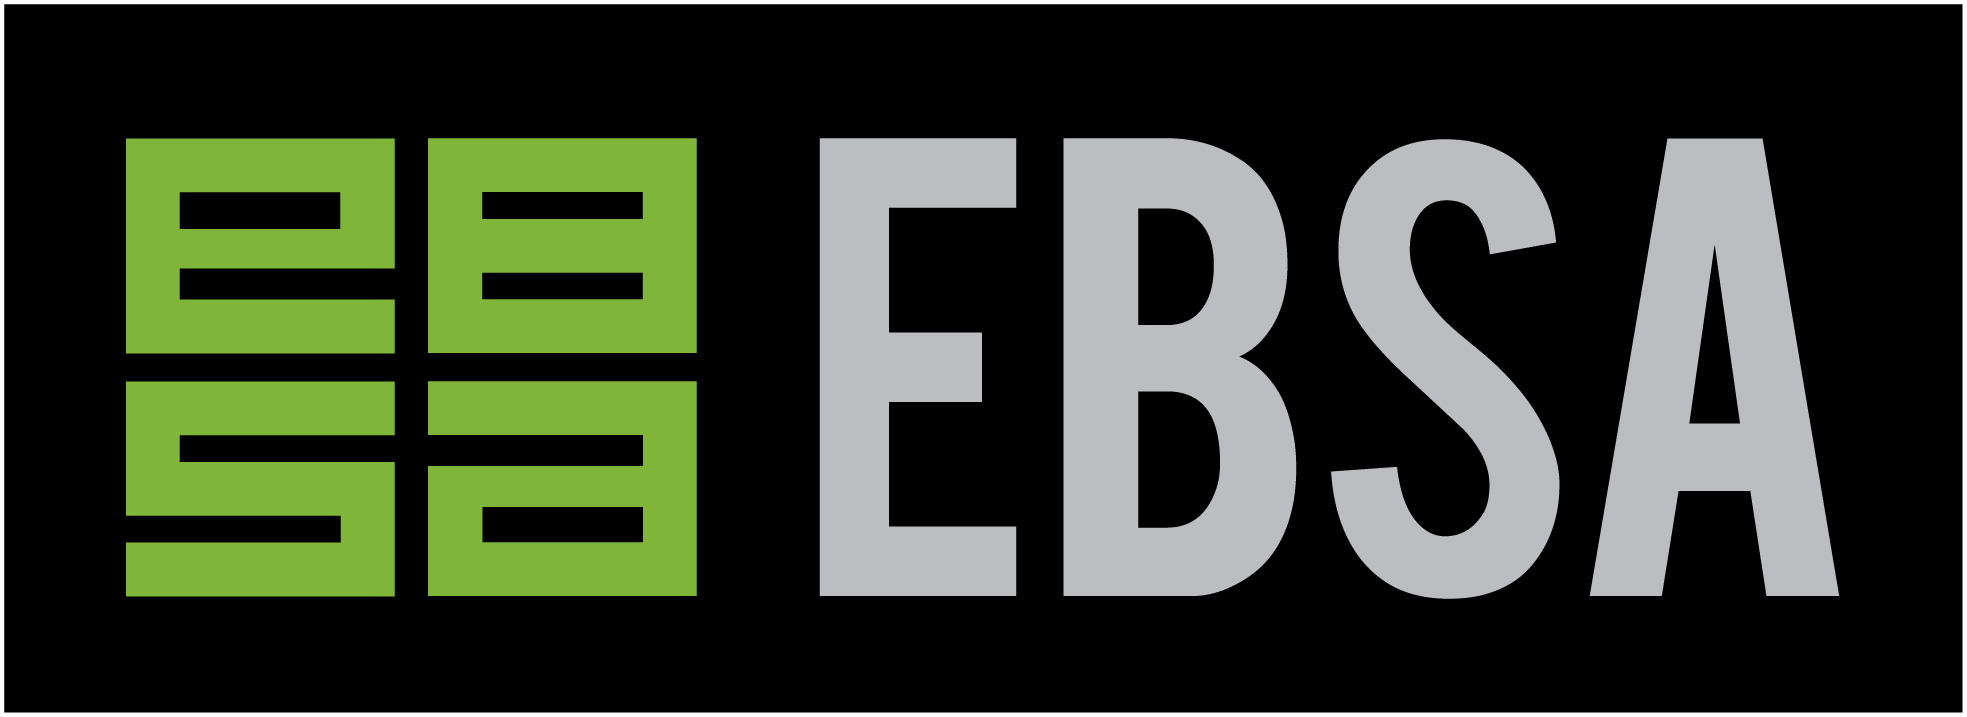 EBSA Logo